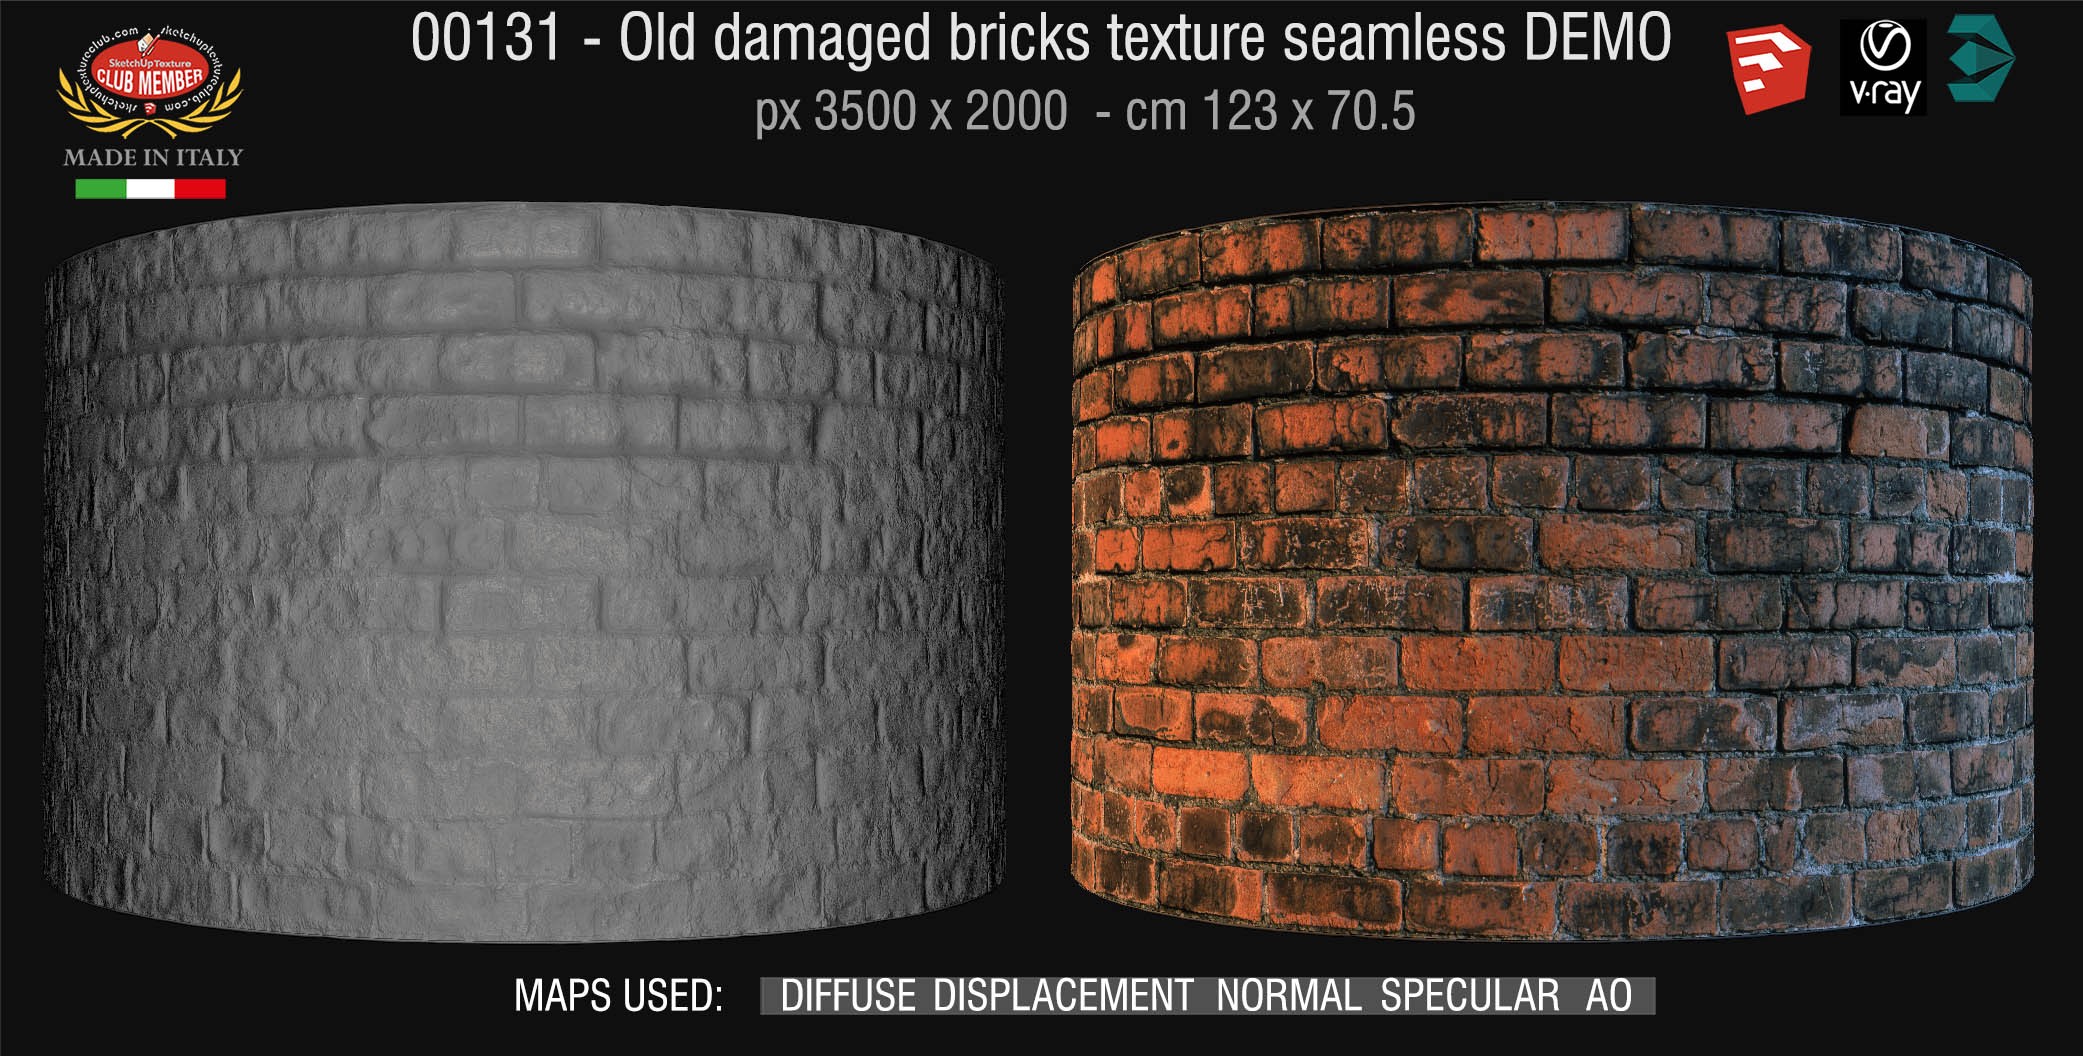 00131 HR Damaged bricks texture seamless + maps DEMO